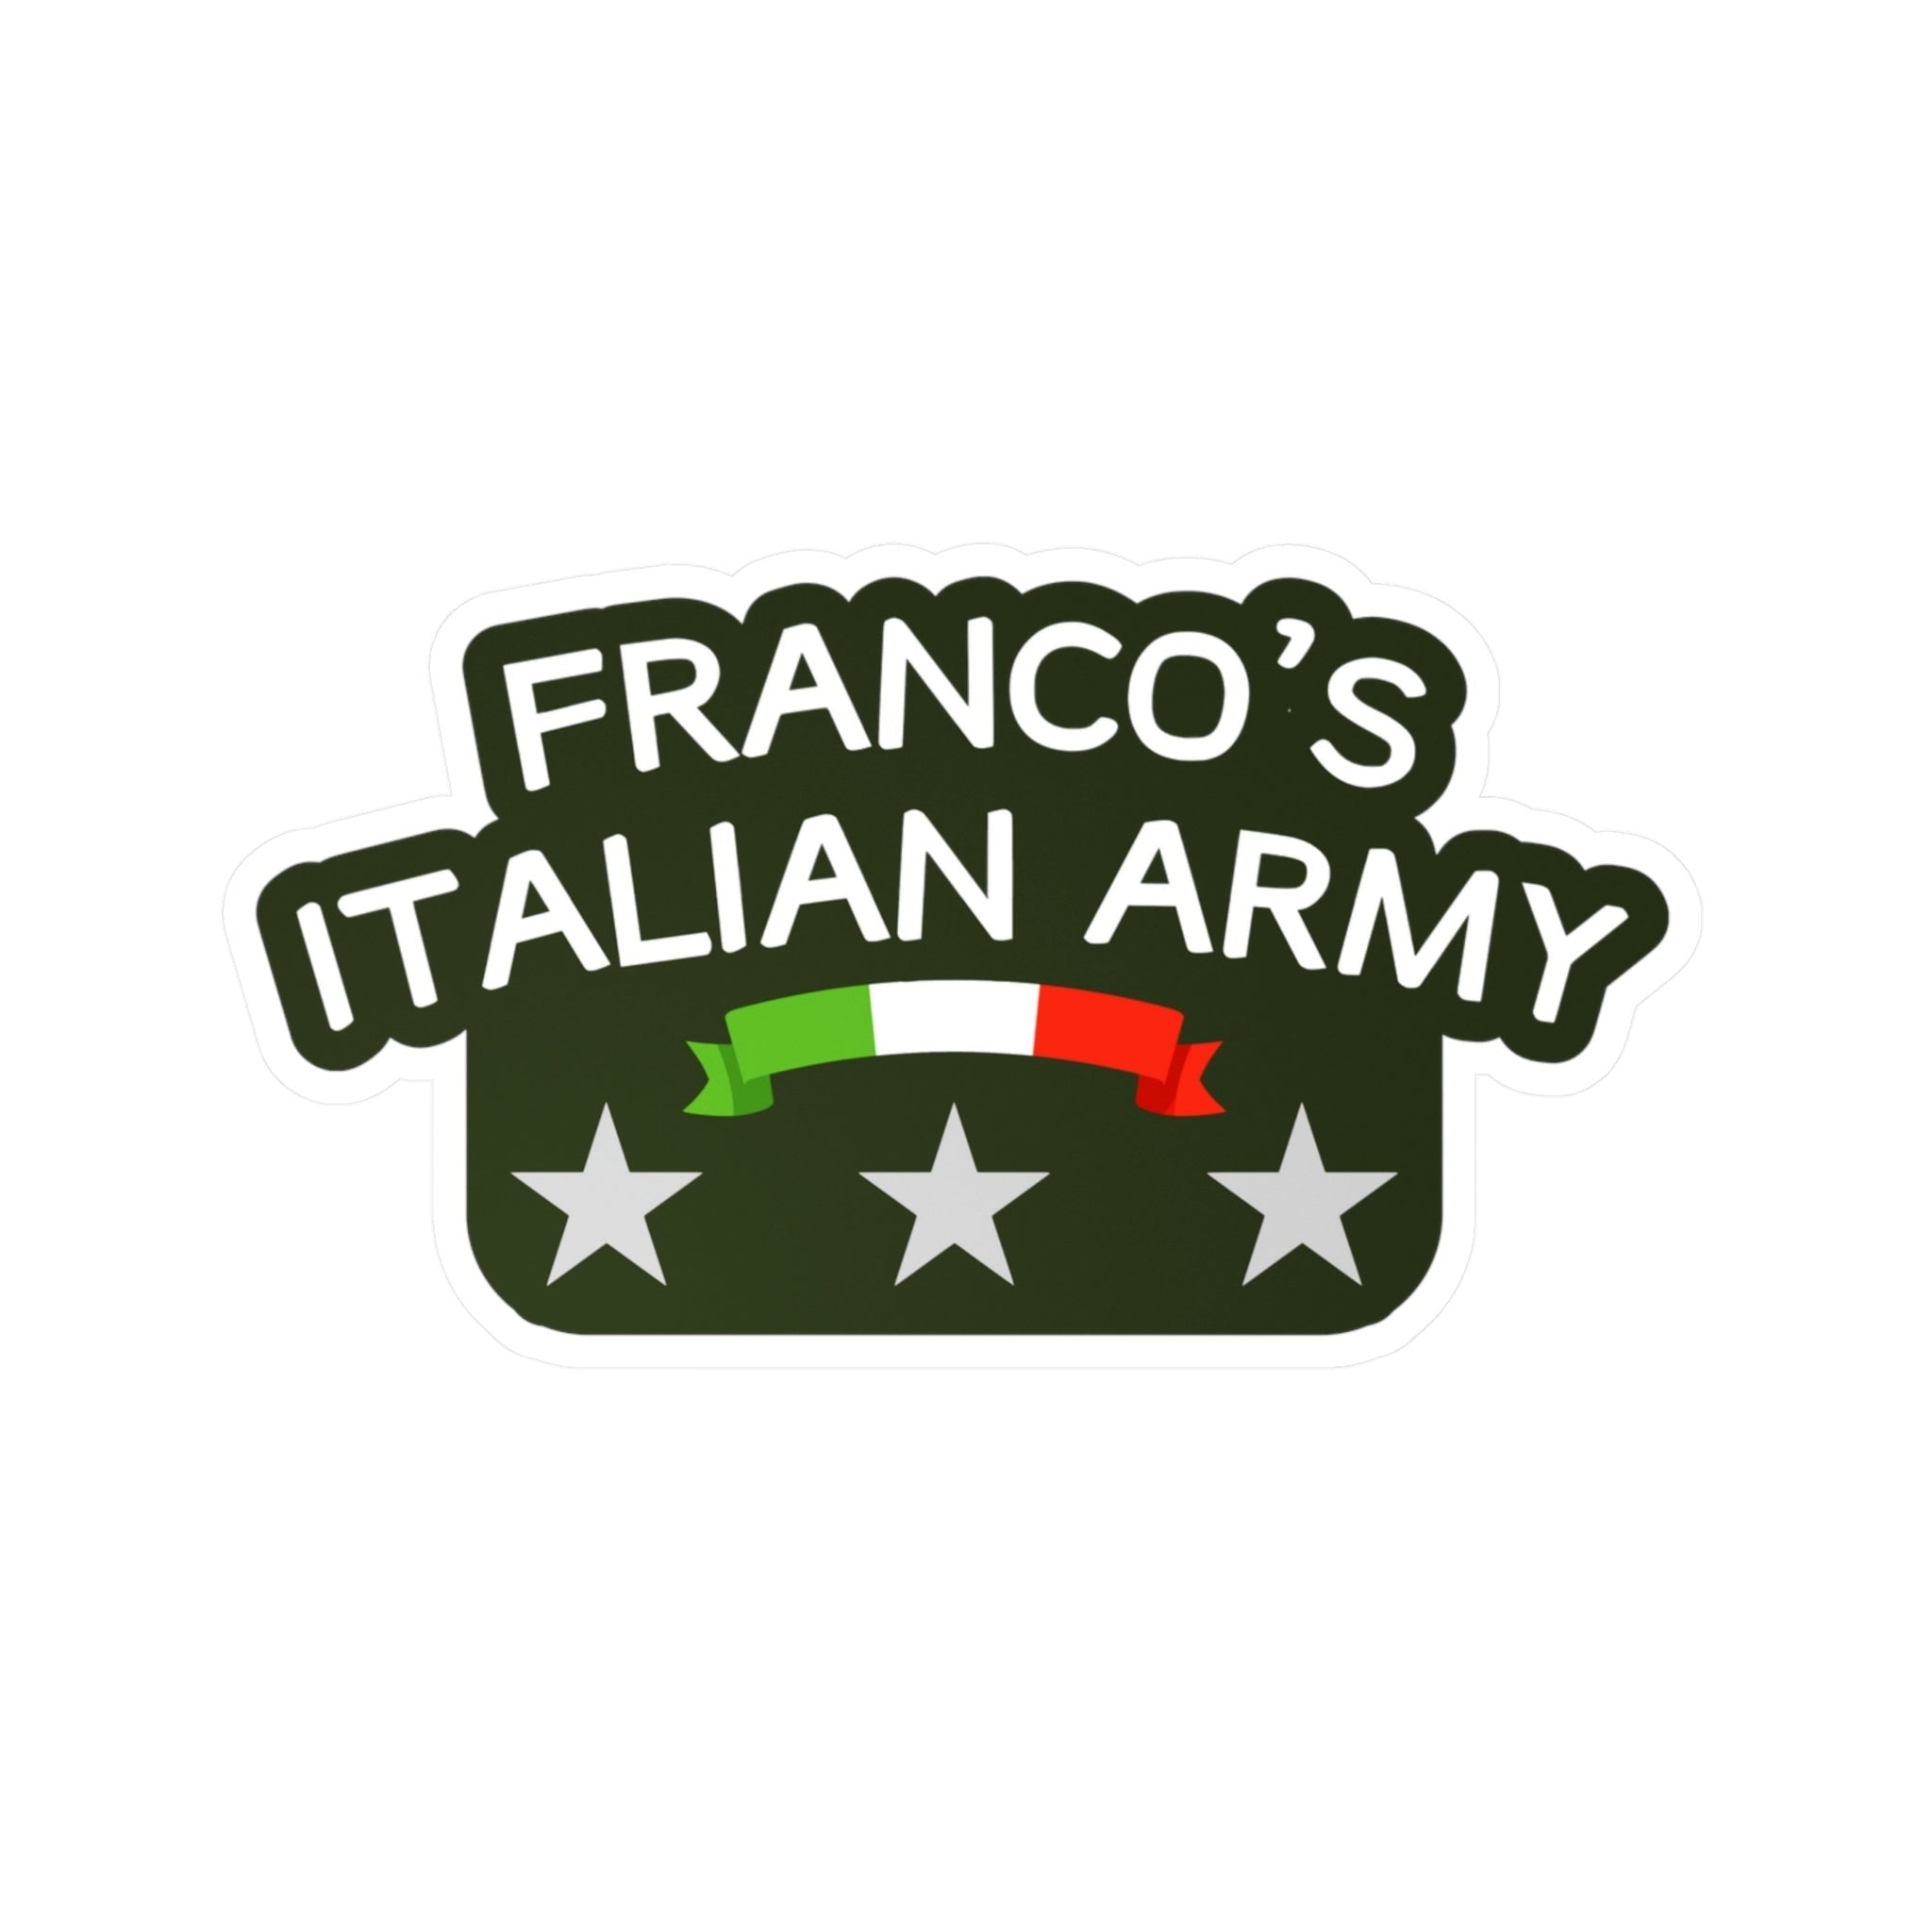 Franco's Italian Army - Kiss-Cut Vinyl Decals - Yinzylvania